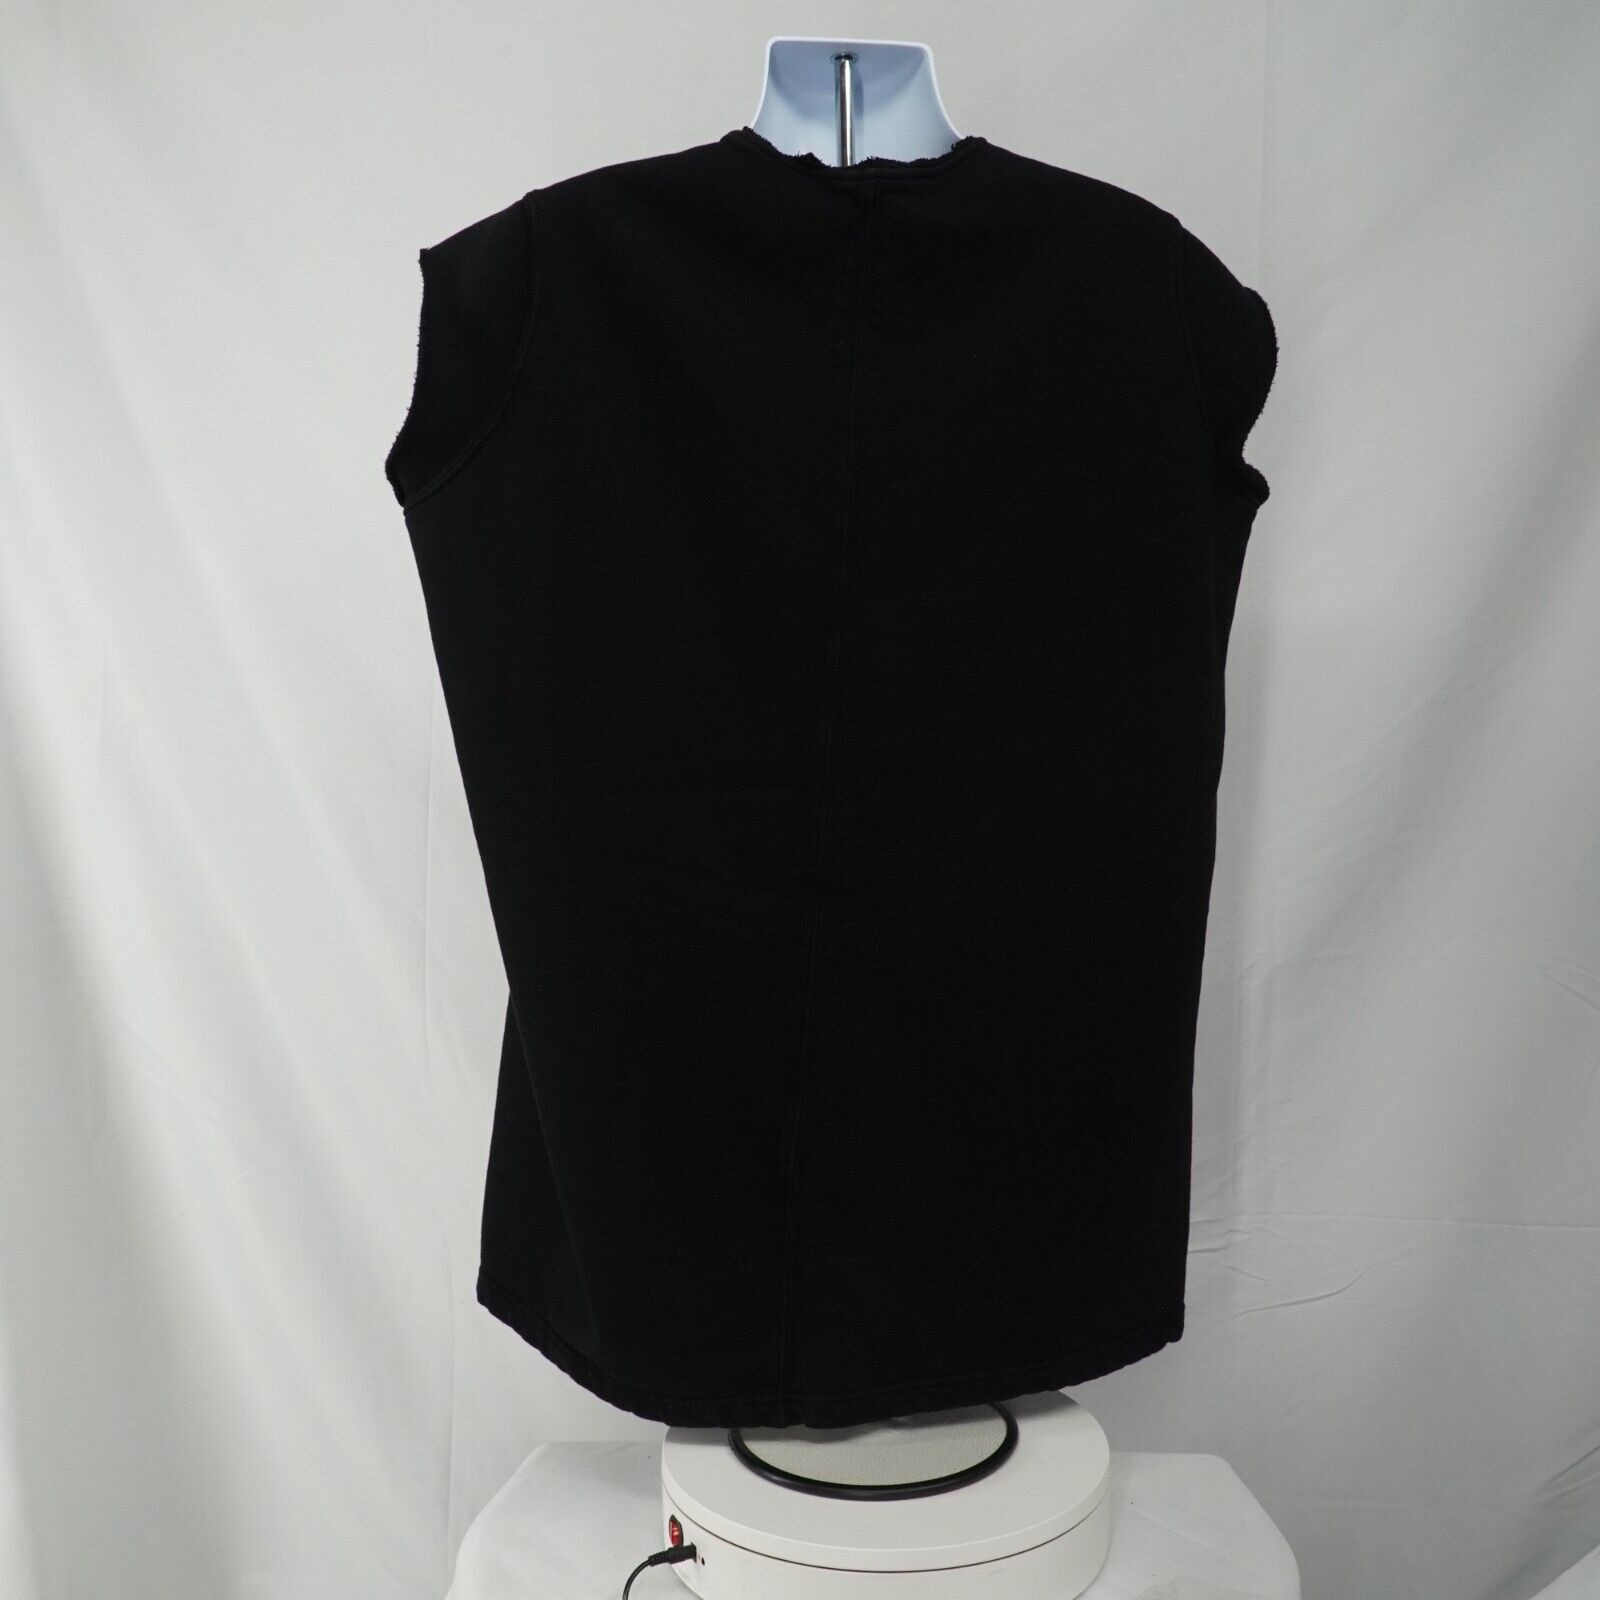 Jumbo Black Sleeveless Sweater Shirt Oversized SS16 Cyclops - 11